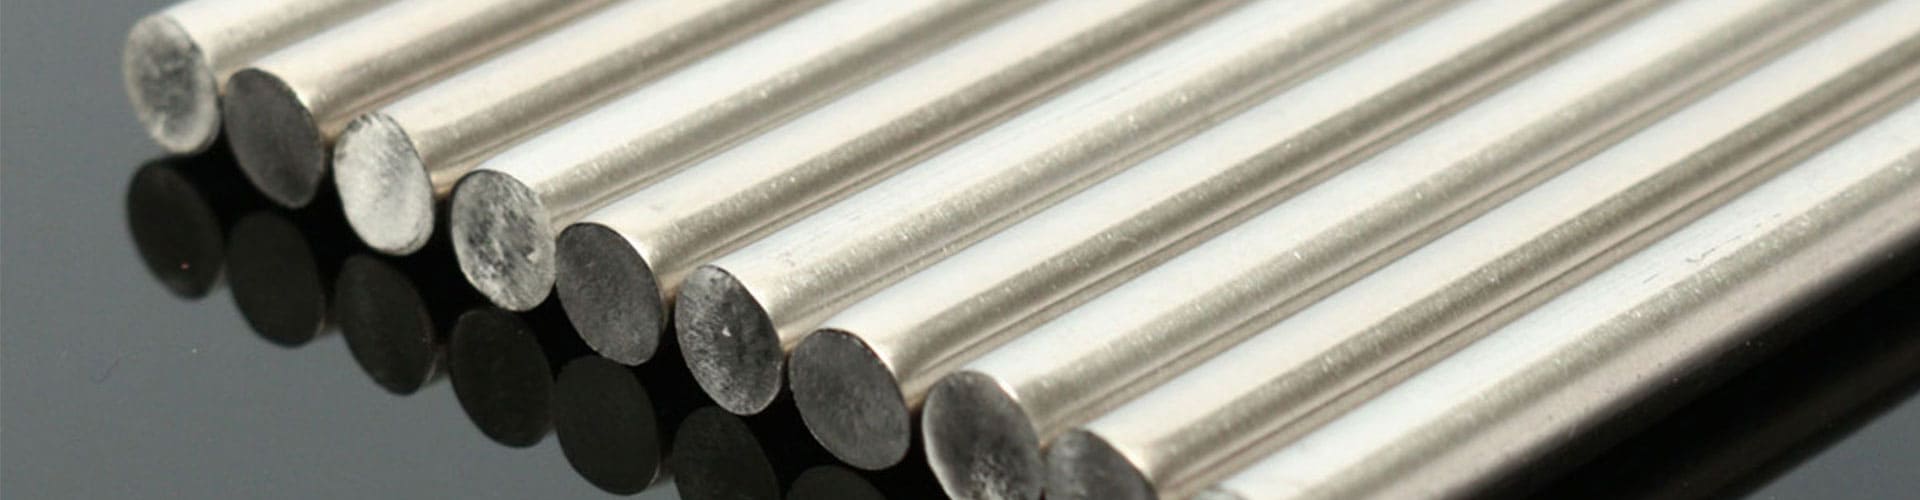 nickel-alloy-201-round-bars-rods-manufacturer-exporter-supplier-in-oman